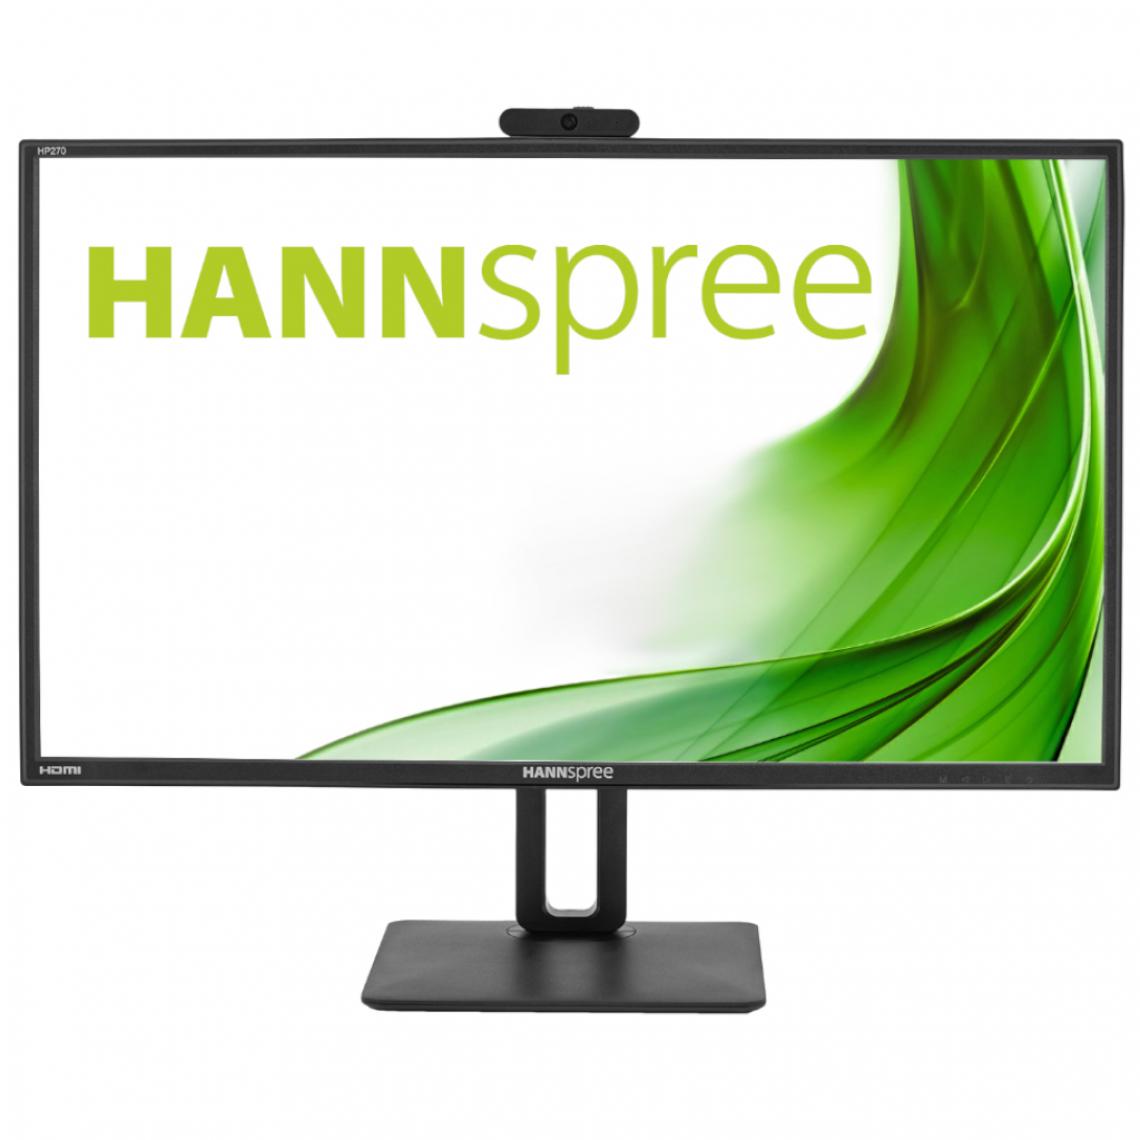 Hannspree - HP270WJB 27p LED Mon HP270WJB 27p LED Monitor 16:9 FullHD 1920x1080 300cd/m2 5ms VGA HDMI 1.4 - Moniteur PC